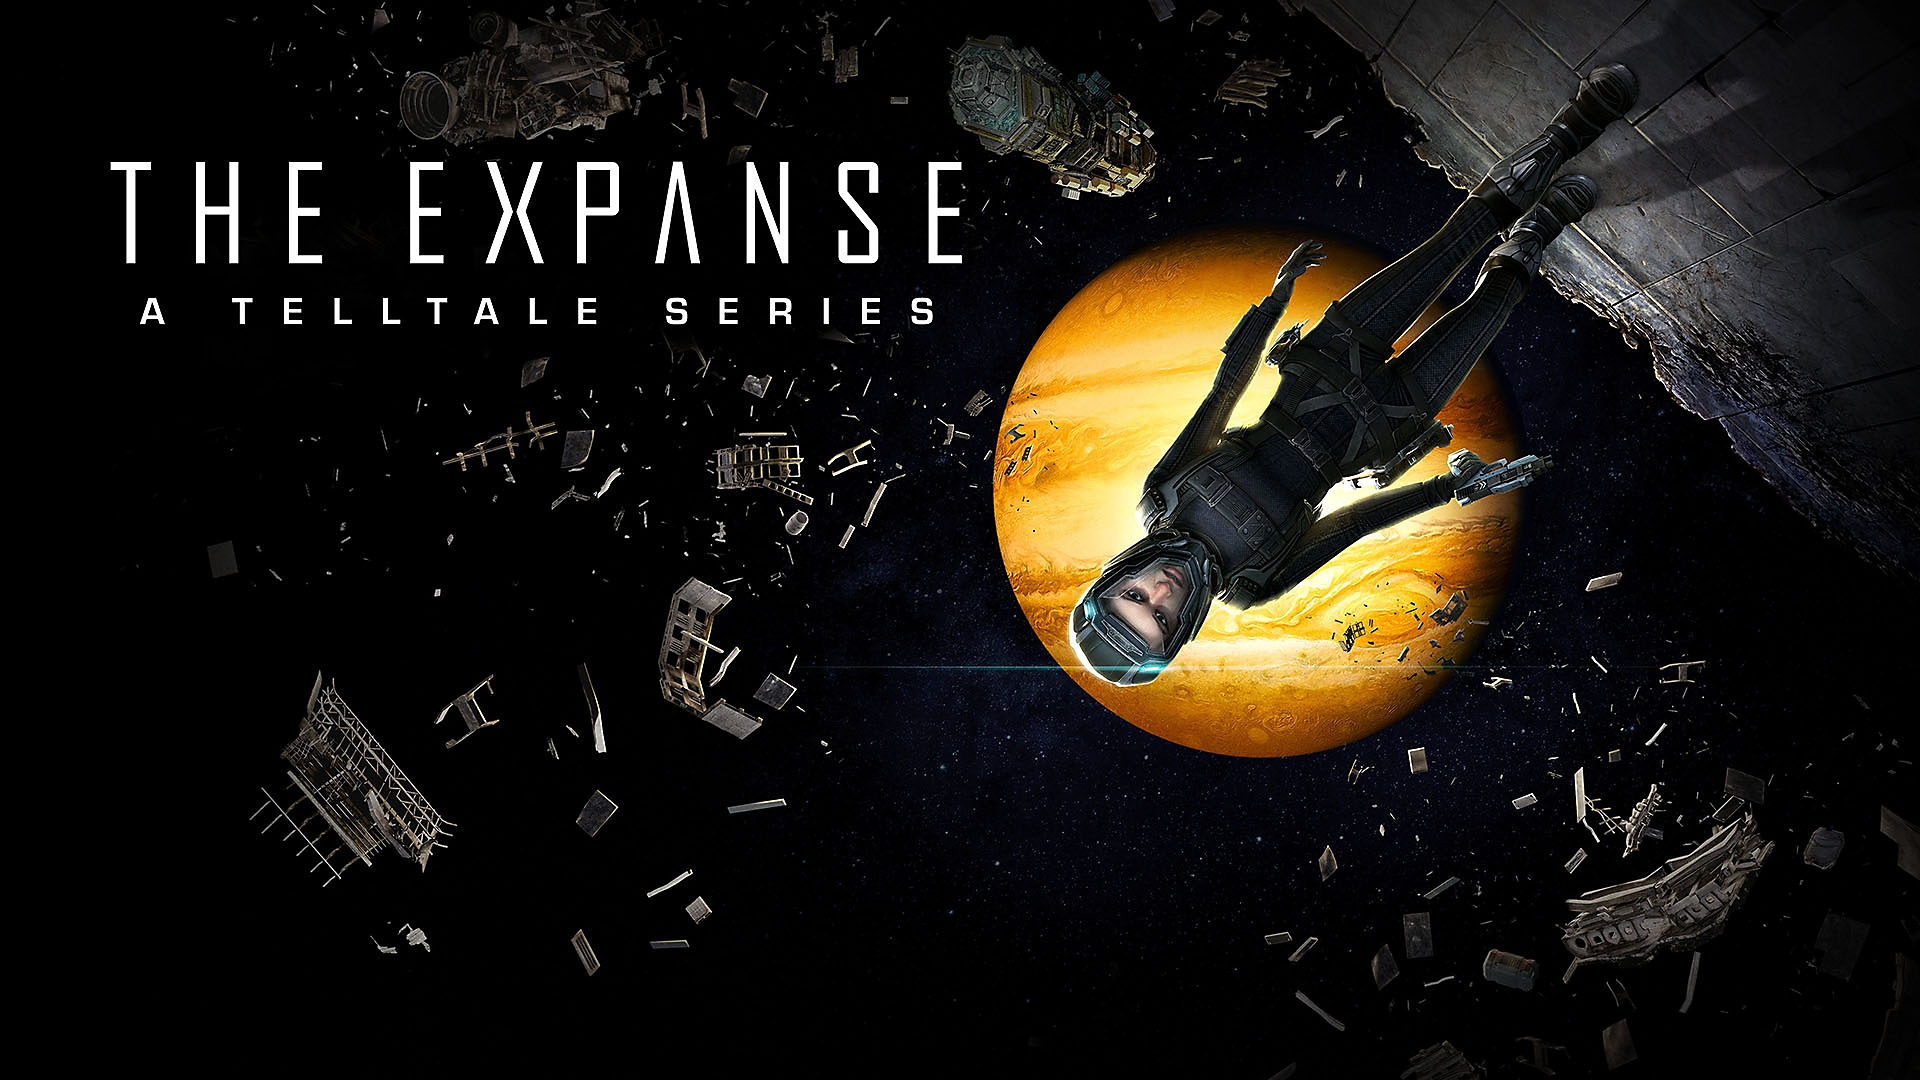 The Expanse: A Telltale Series launch trailer